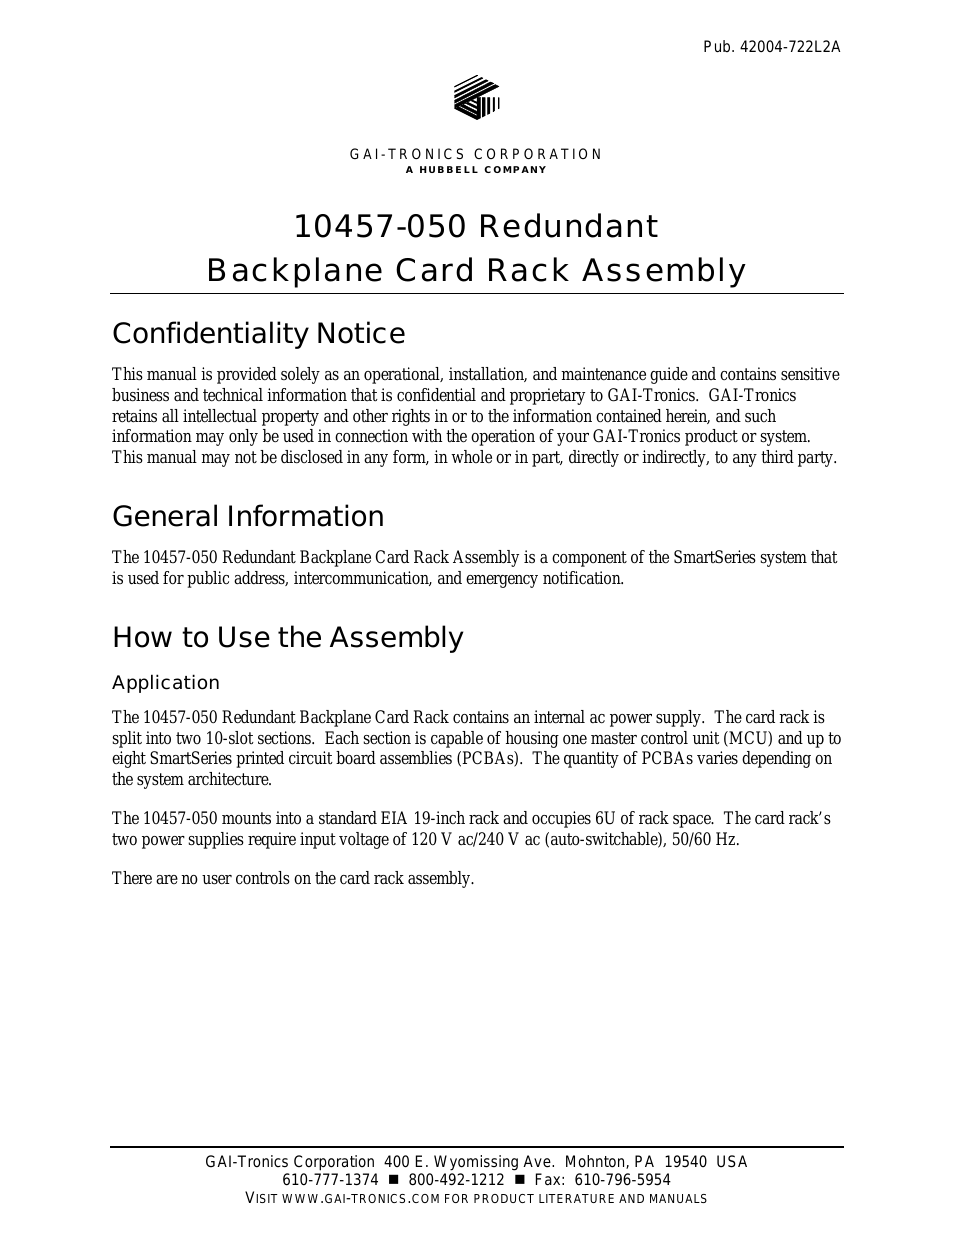 10457-050 Redundant Backplane Card Rack Assembly